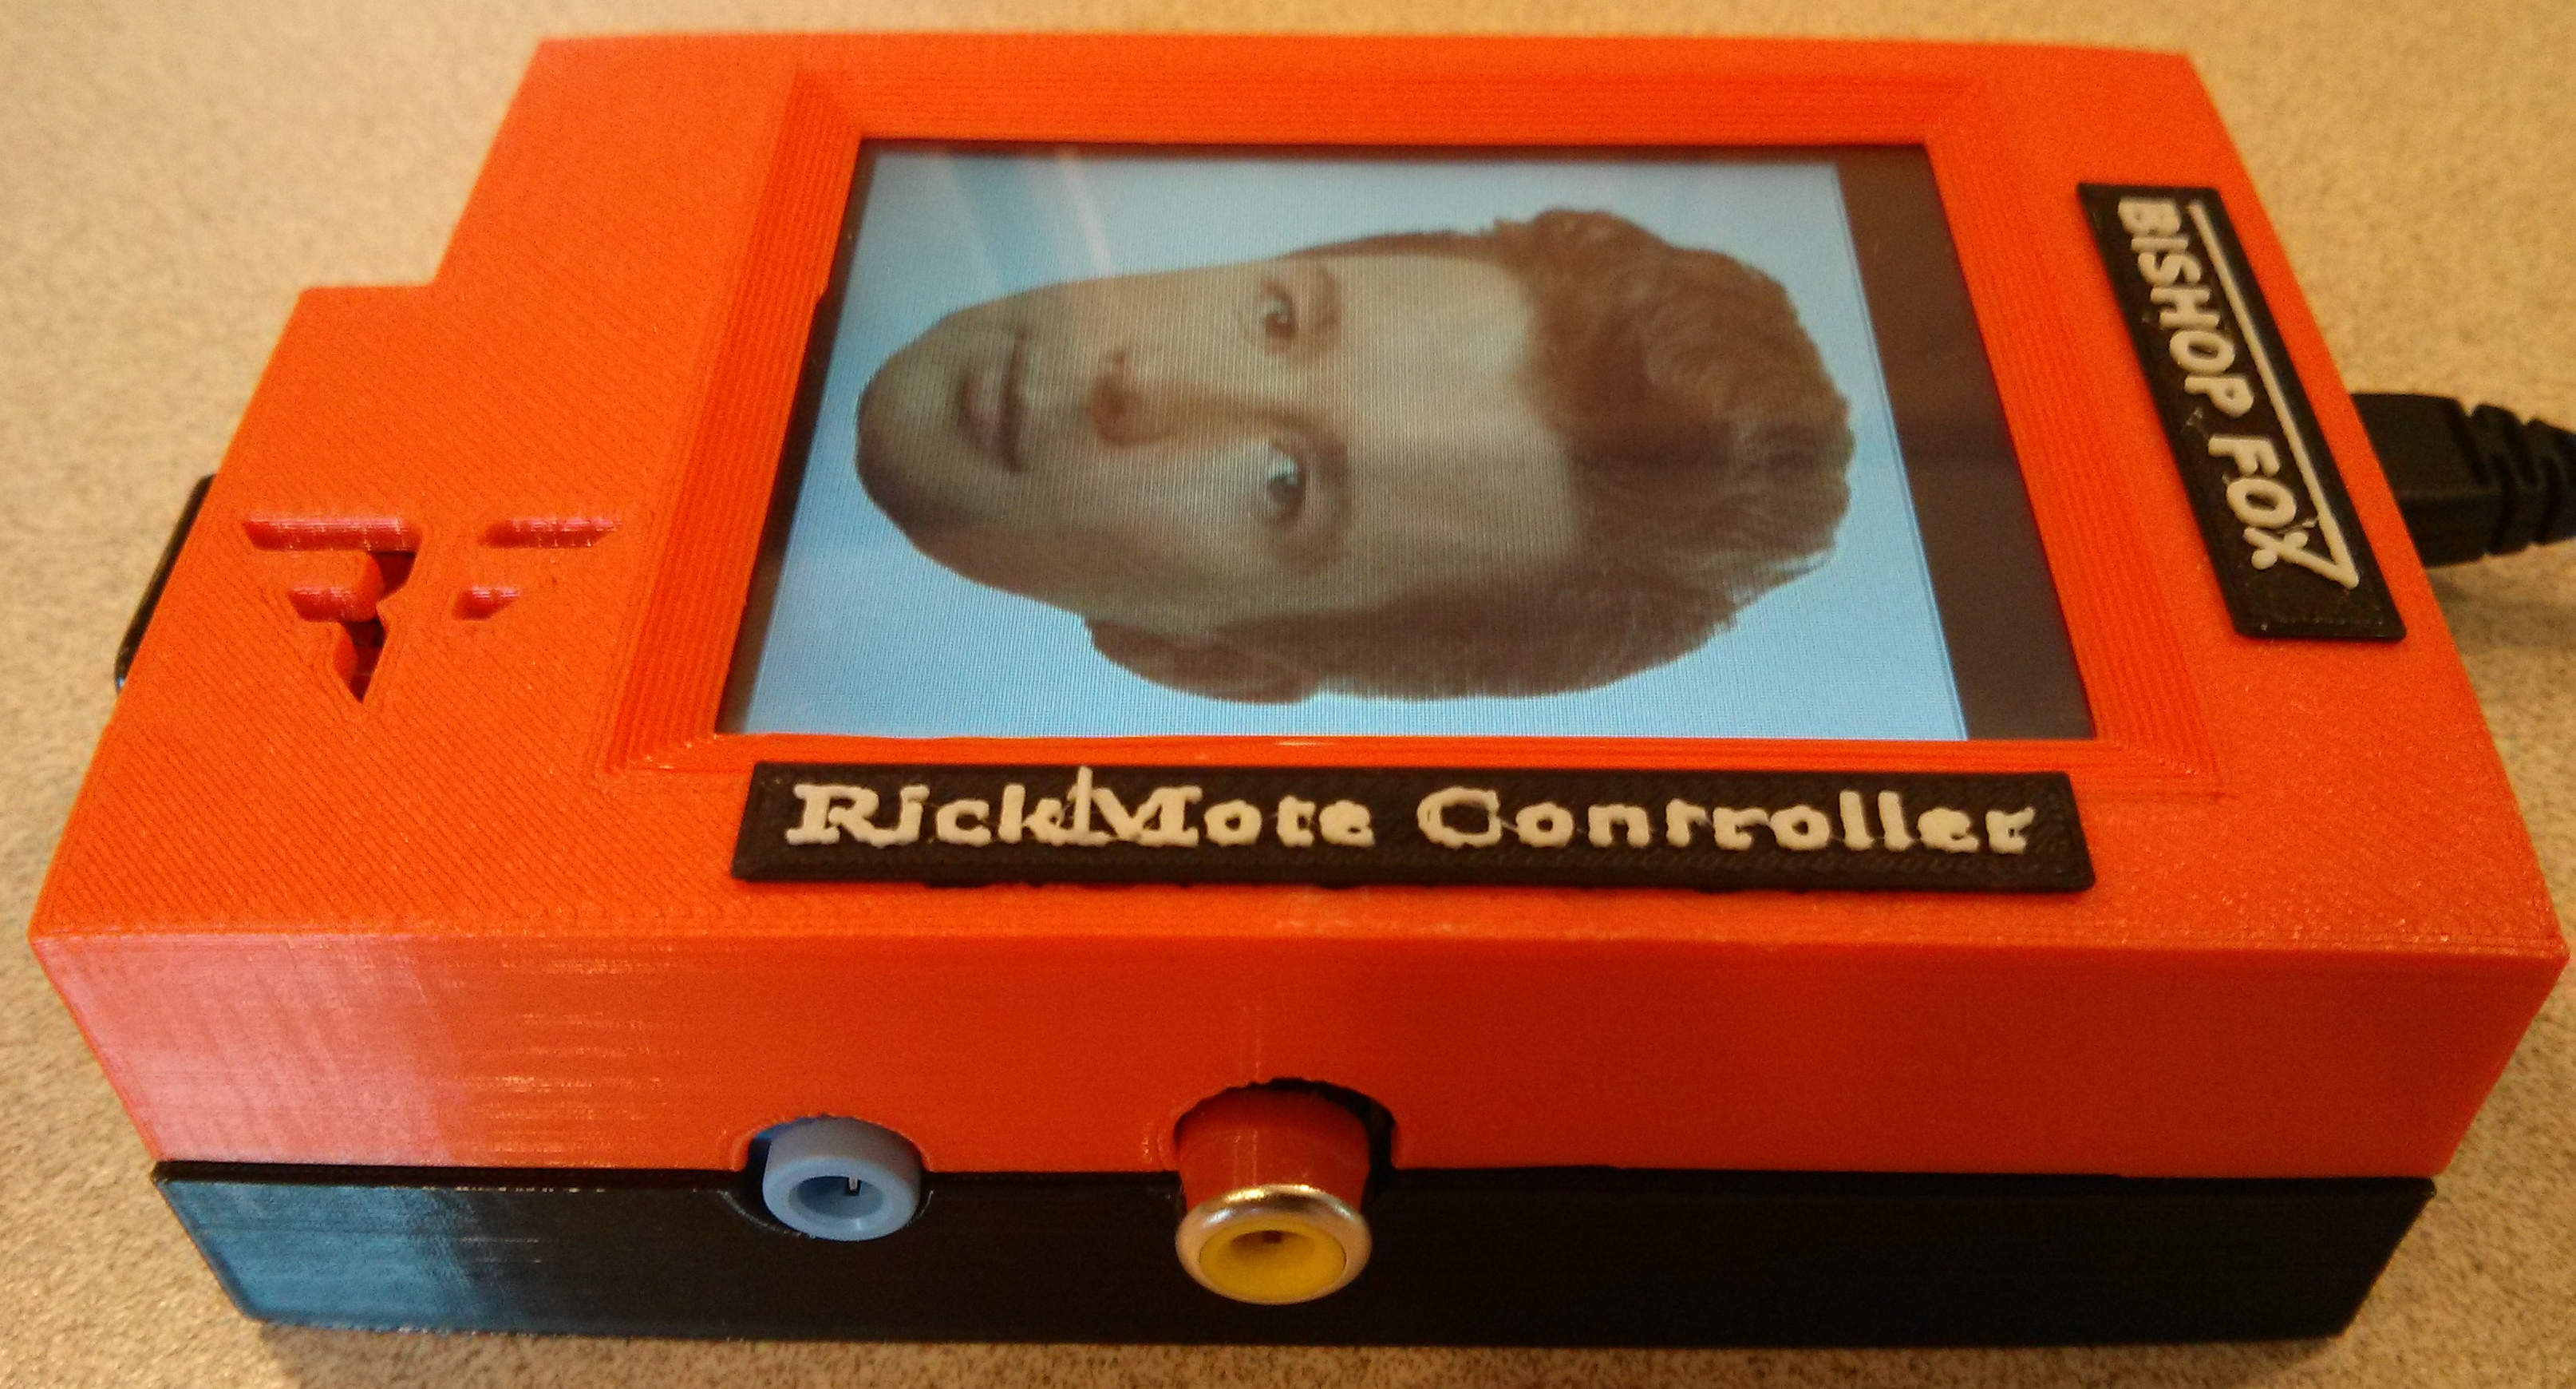 The Rickmote Controller